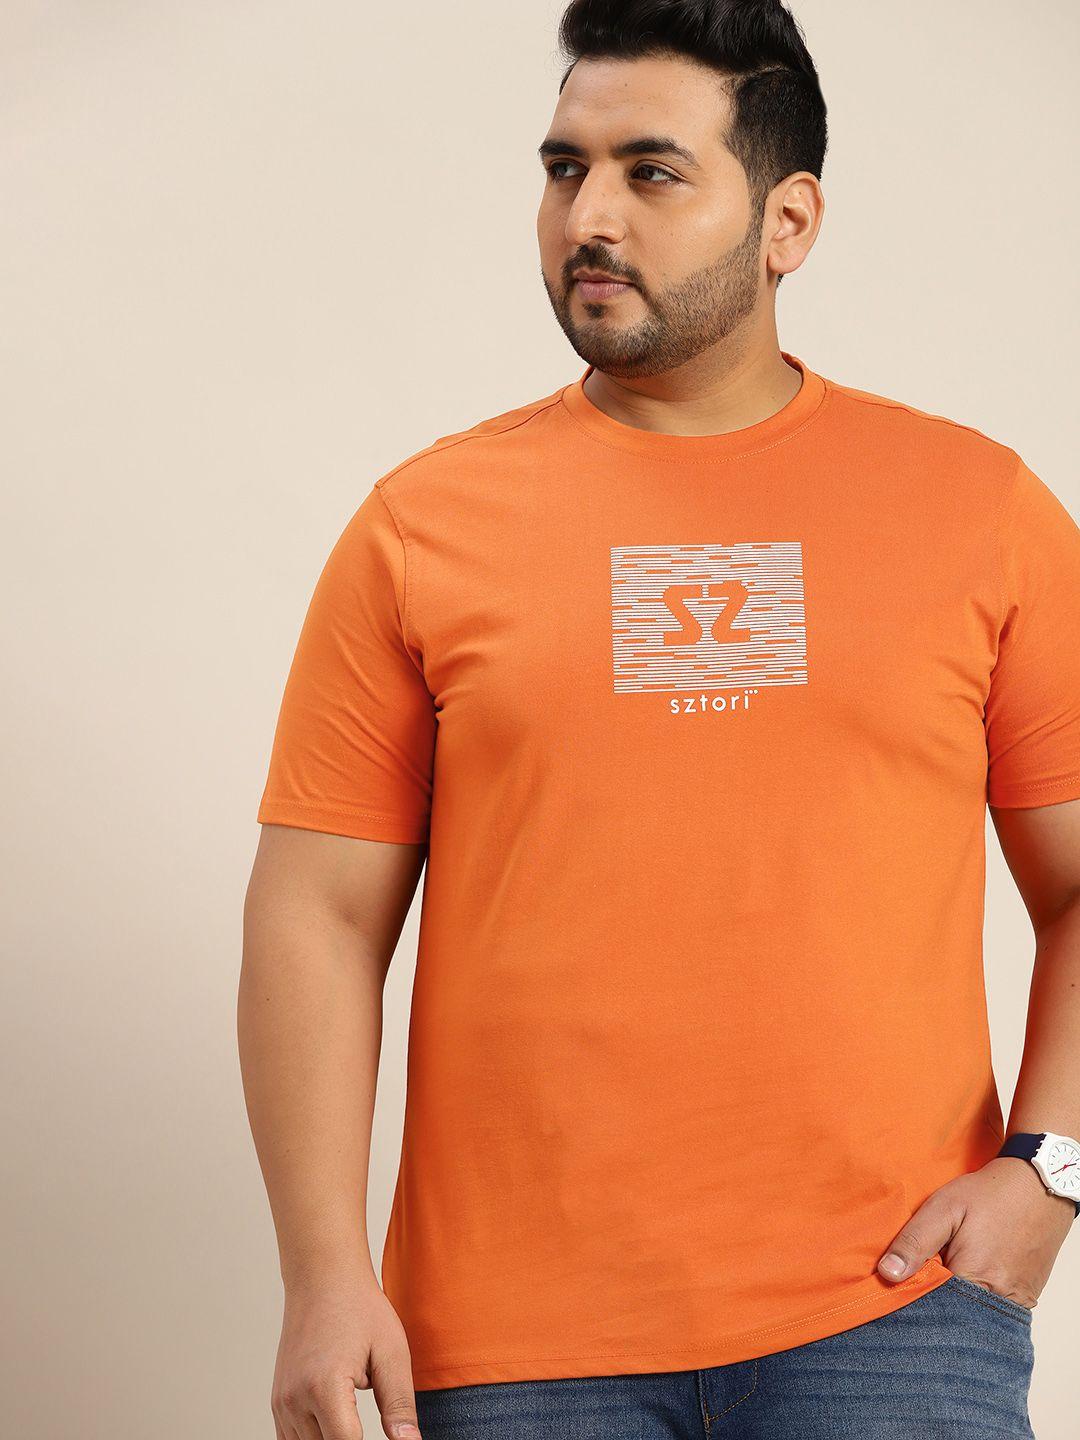 sztori plus size men orange & white brand logo printed pure cotton t-shirt